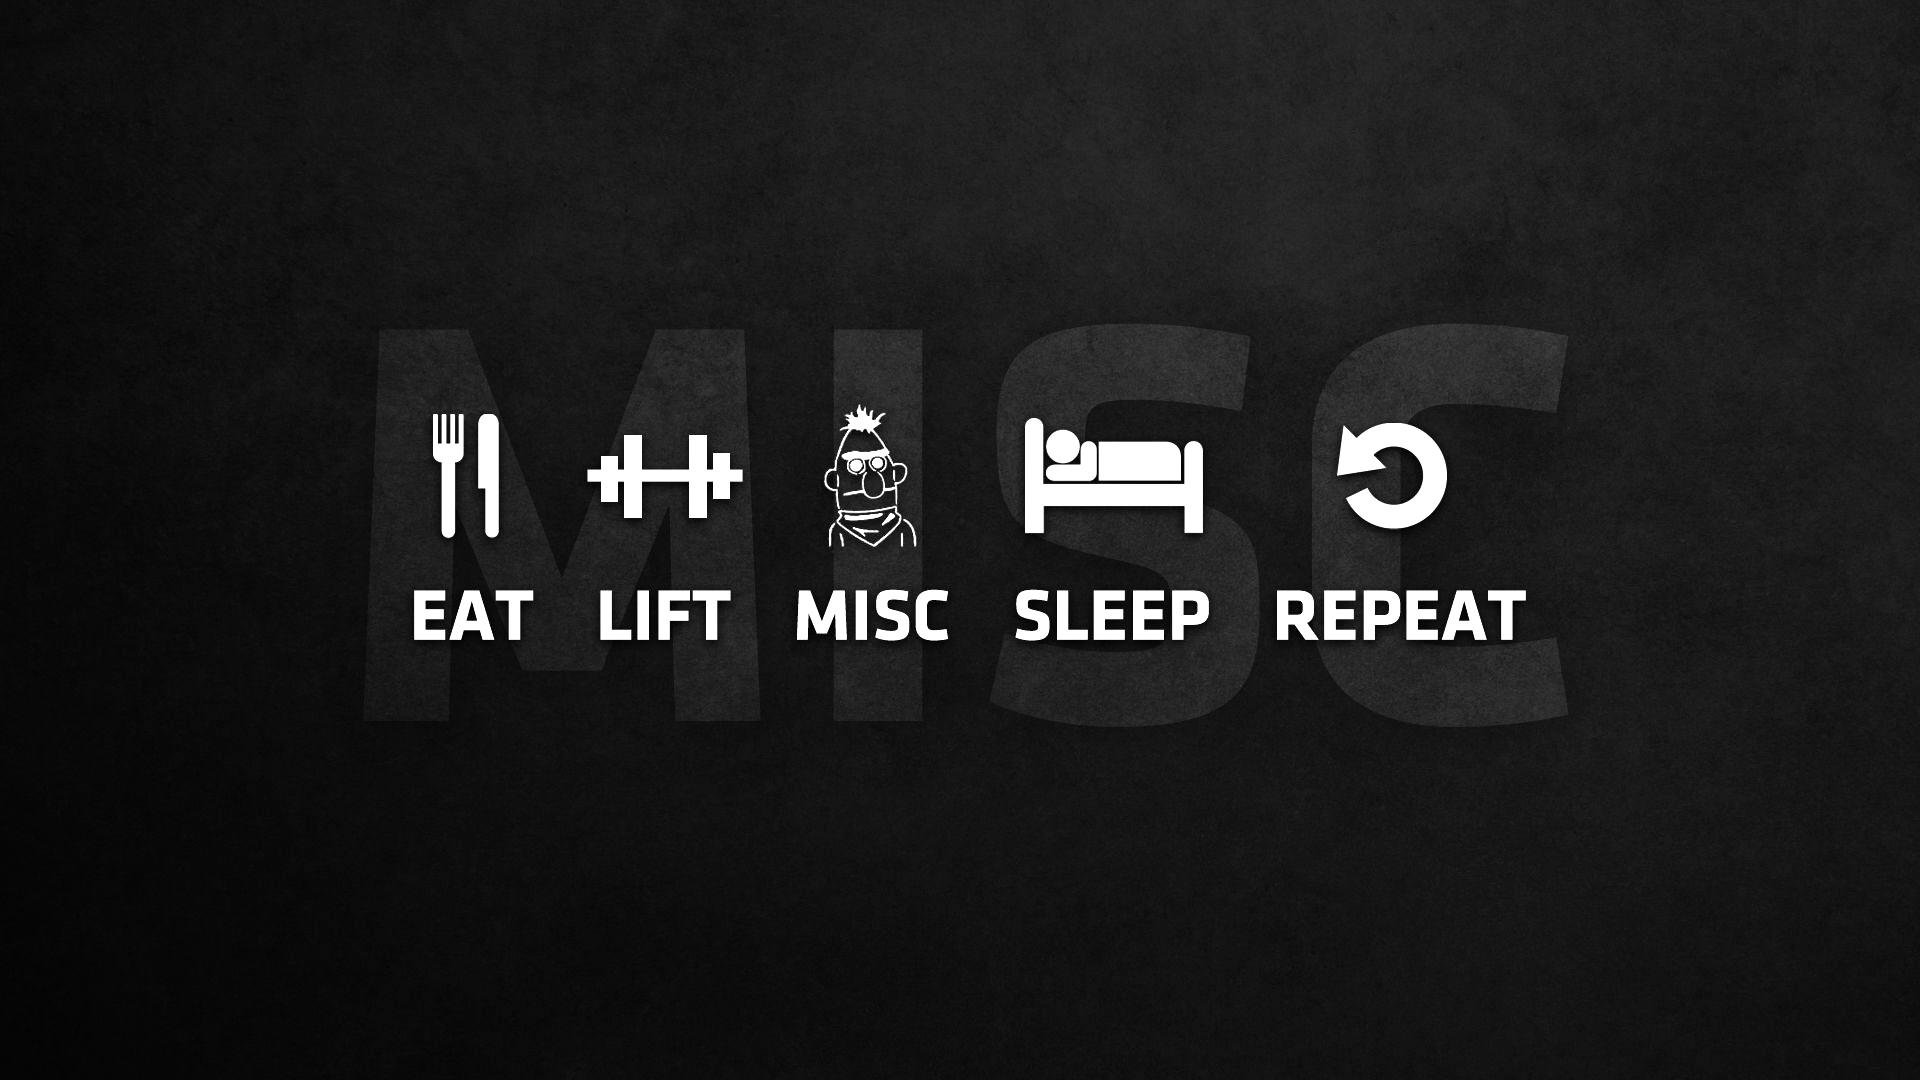 Eat lift misc sleep repeat wallpaper x